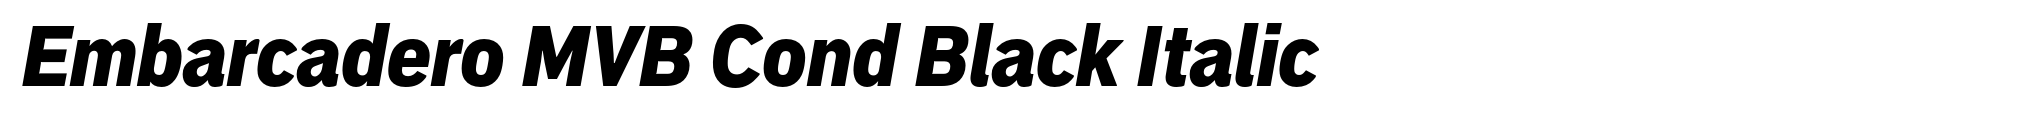 Embarcadero MVB Cond Black Italic image